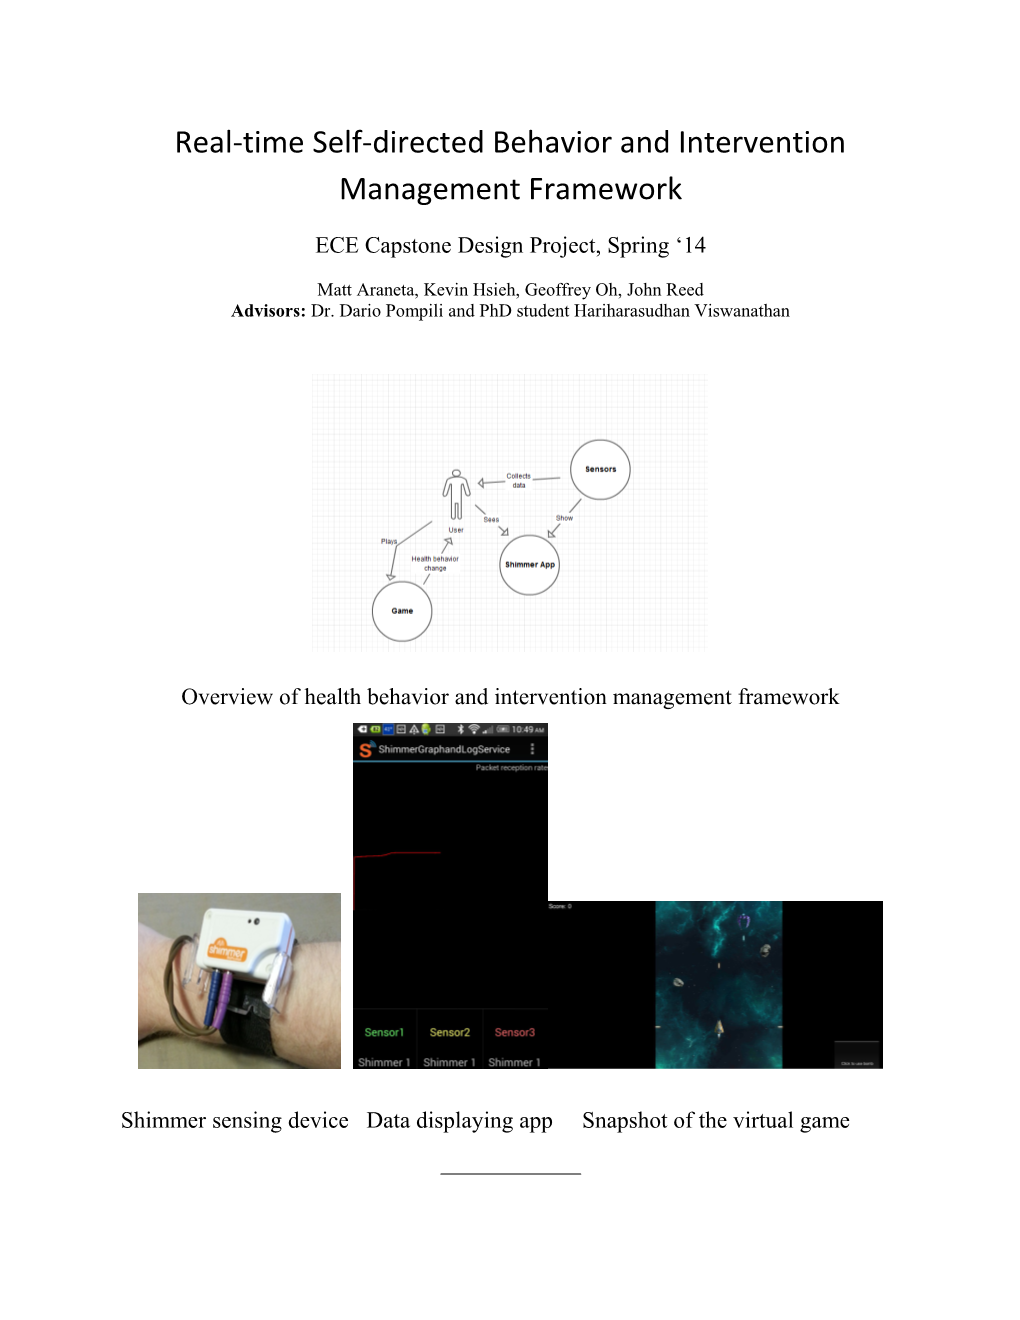 Real-Time Self-Directed Behavior and Intervention Management Framework